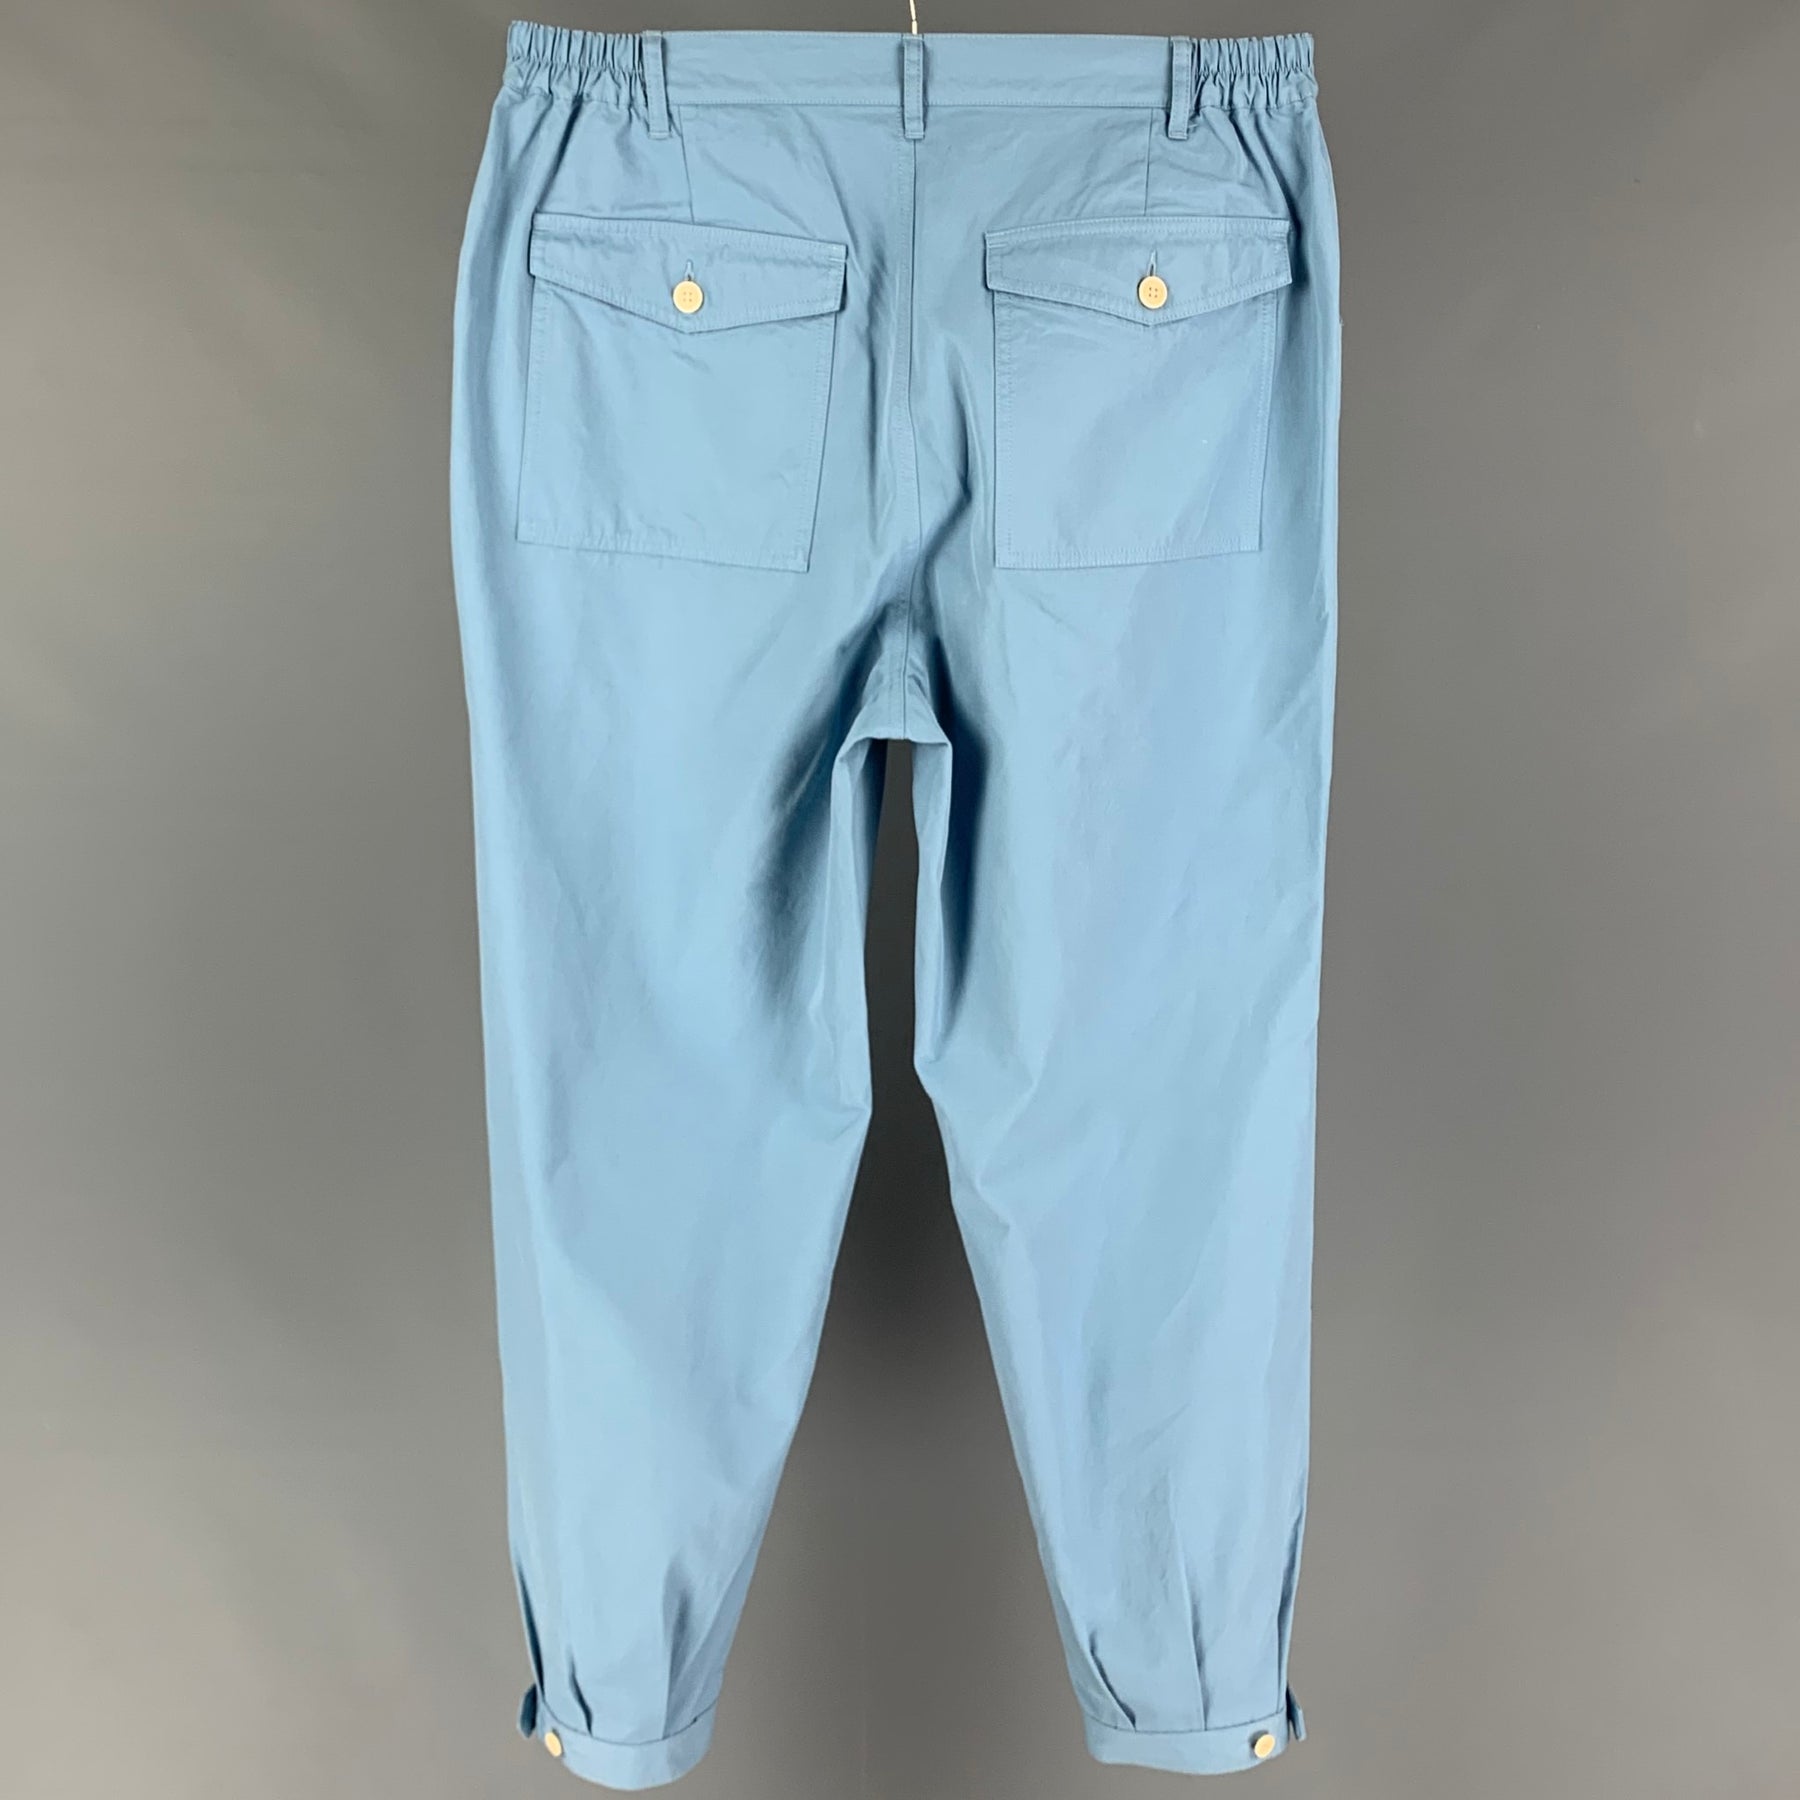 VISVIM Size L Light Blue Cotton Zip Fly Carroll Trouser Pants 